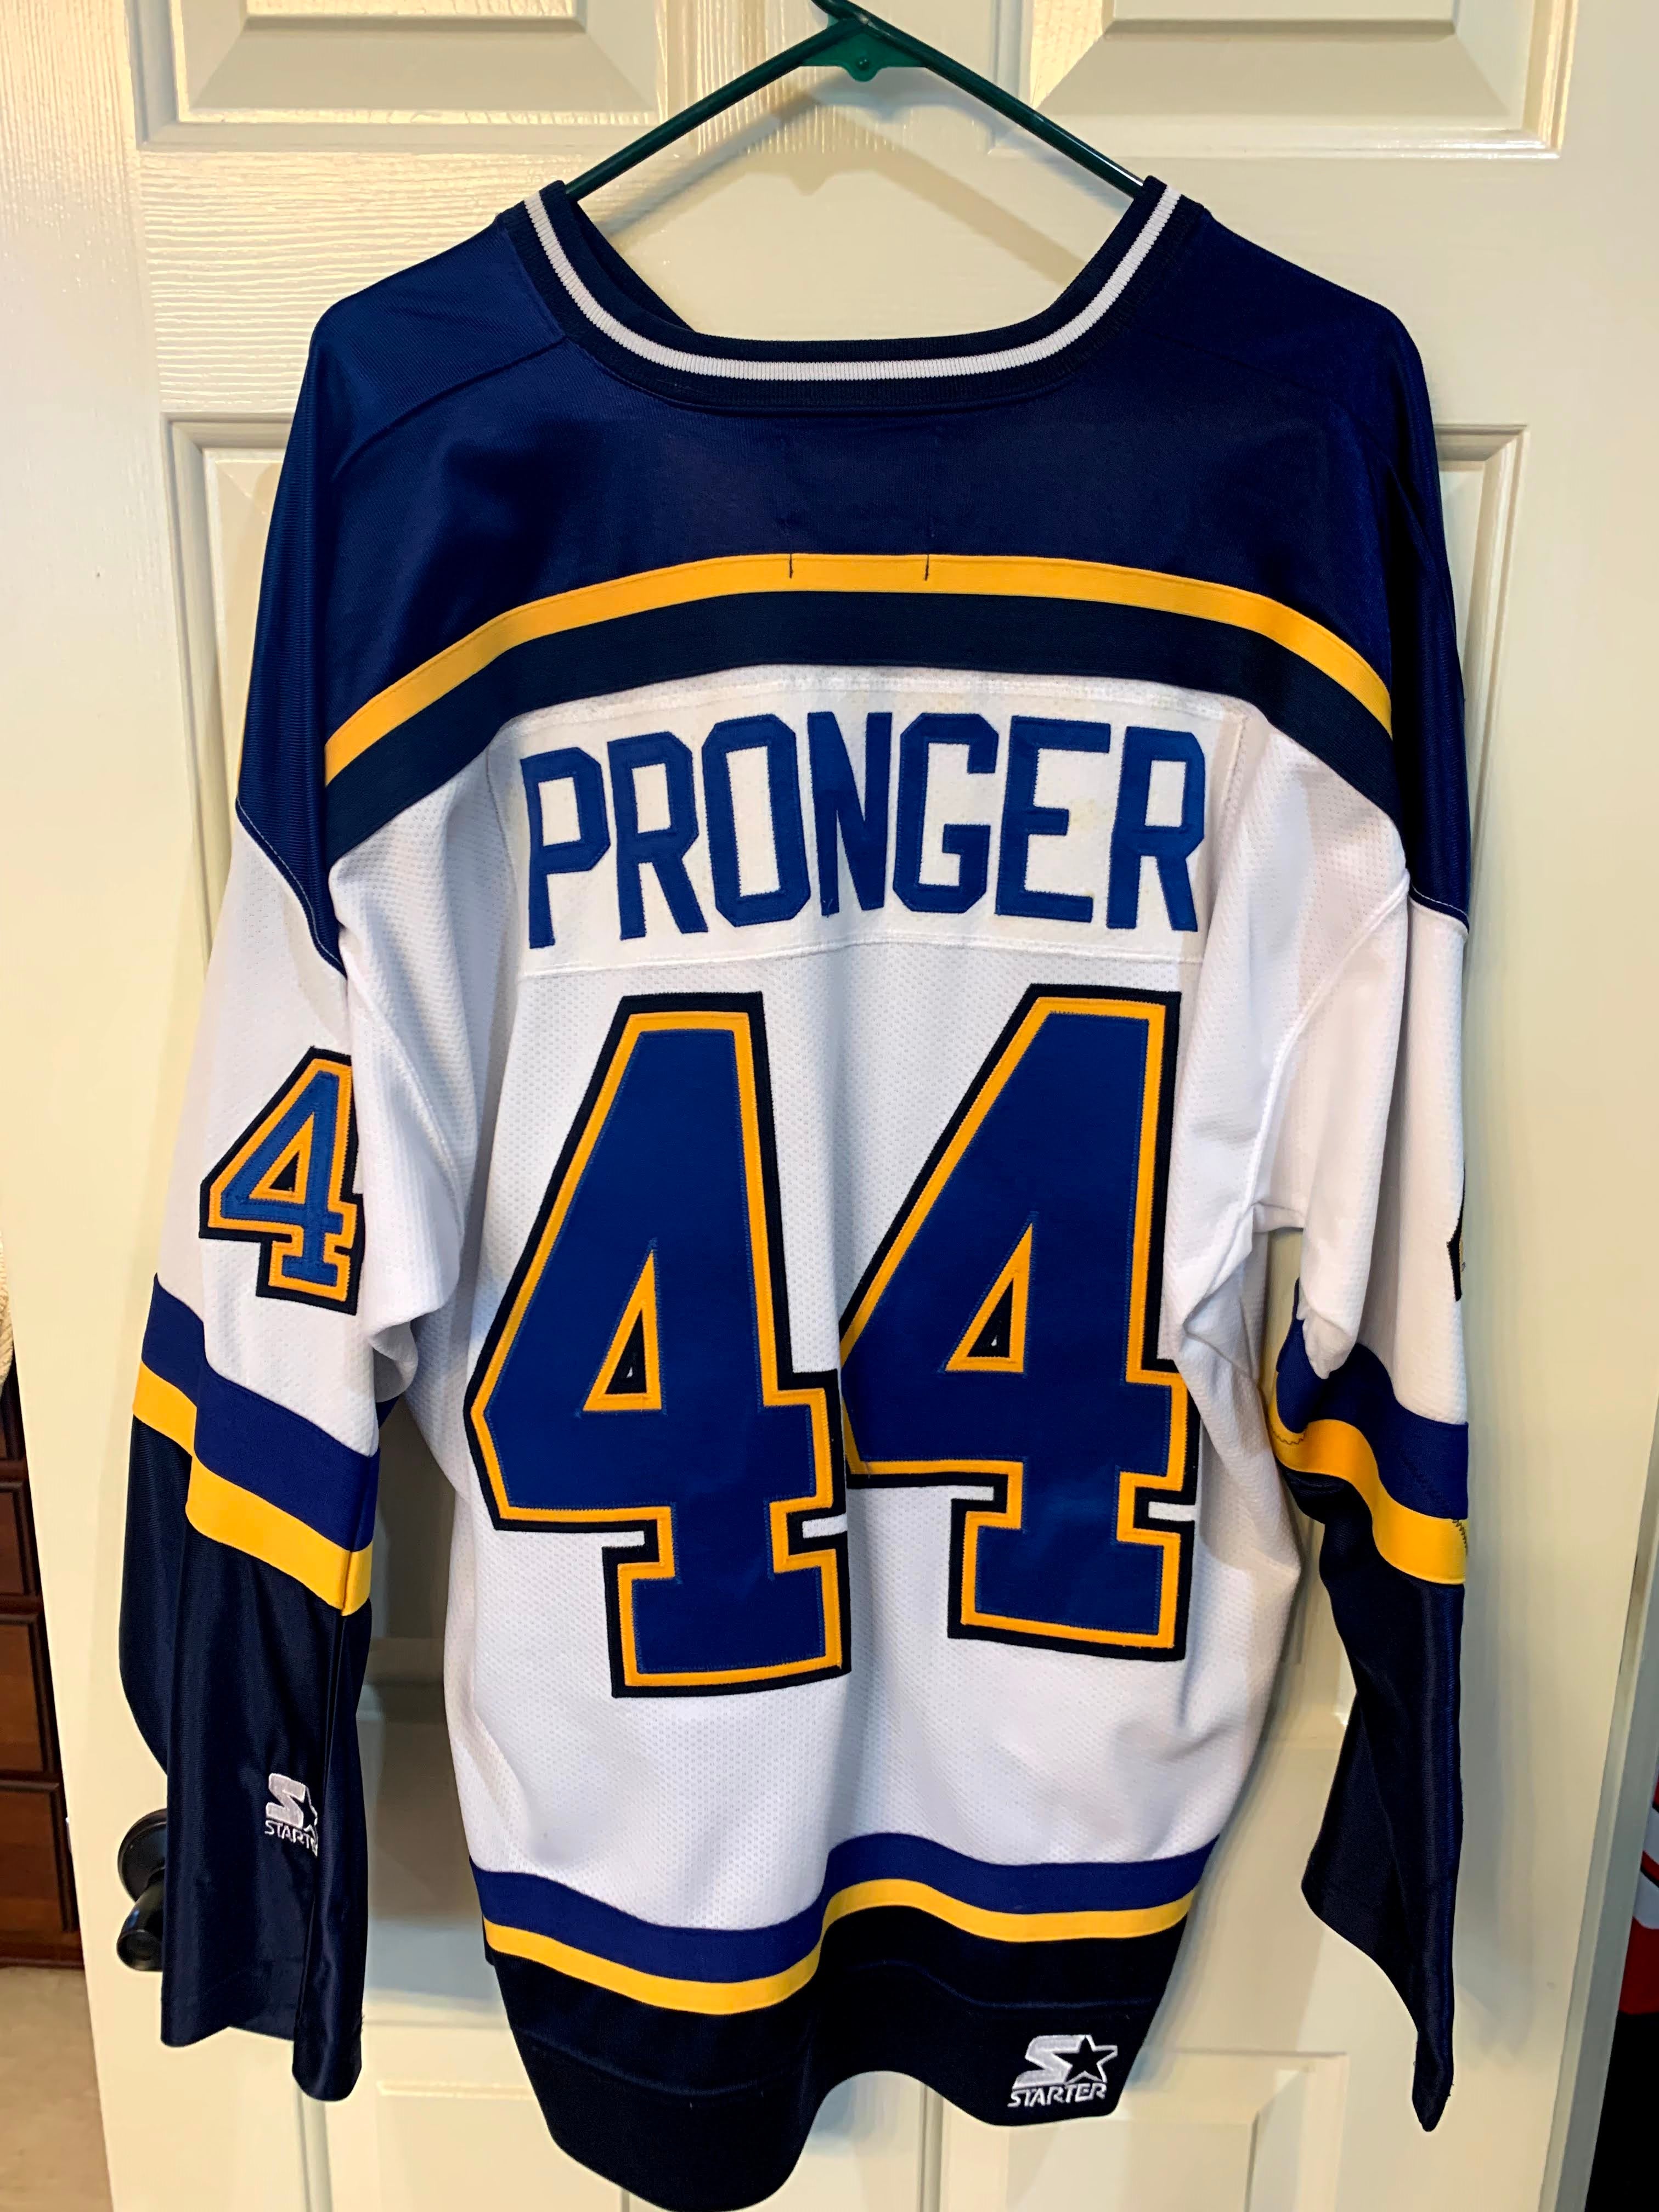 Starter NHL St. Louis Blues Vintage #44 Chris Pronger Jersey